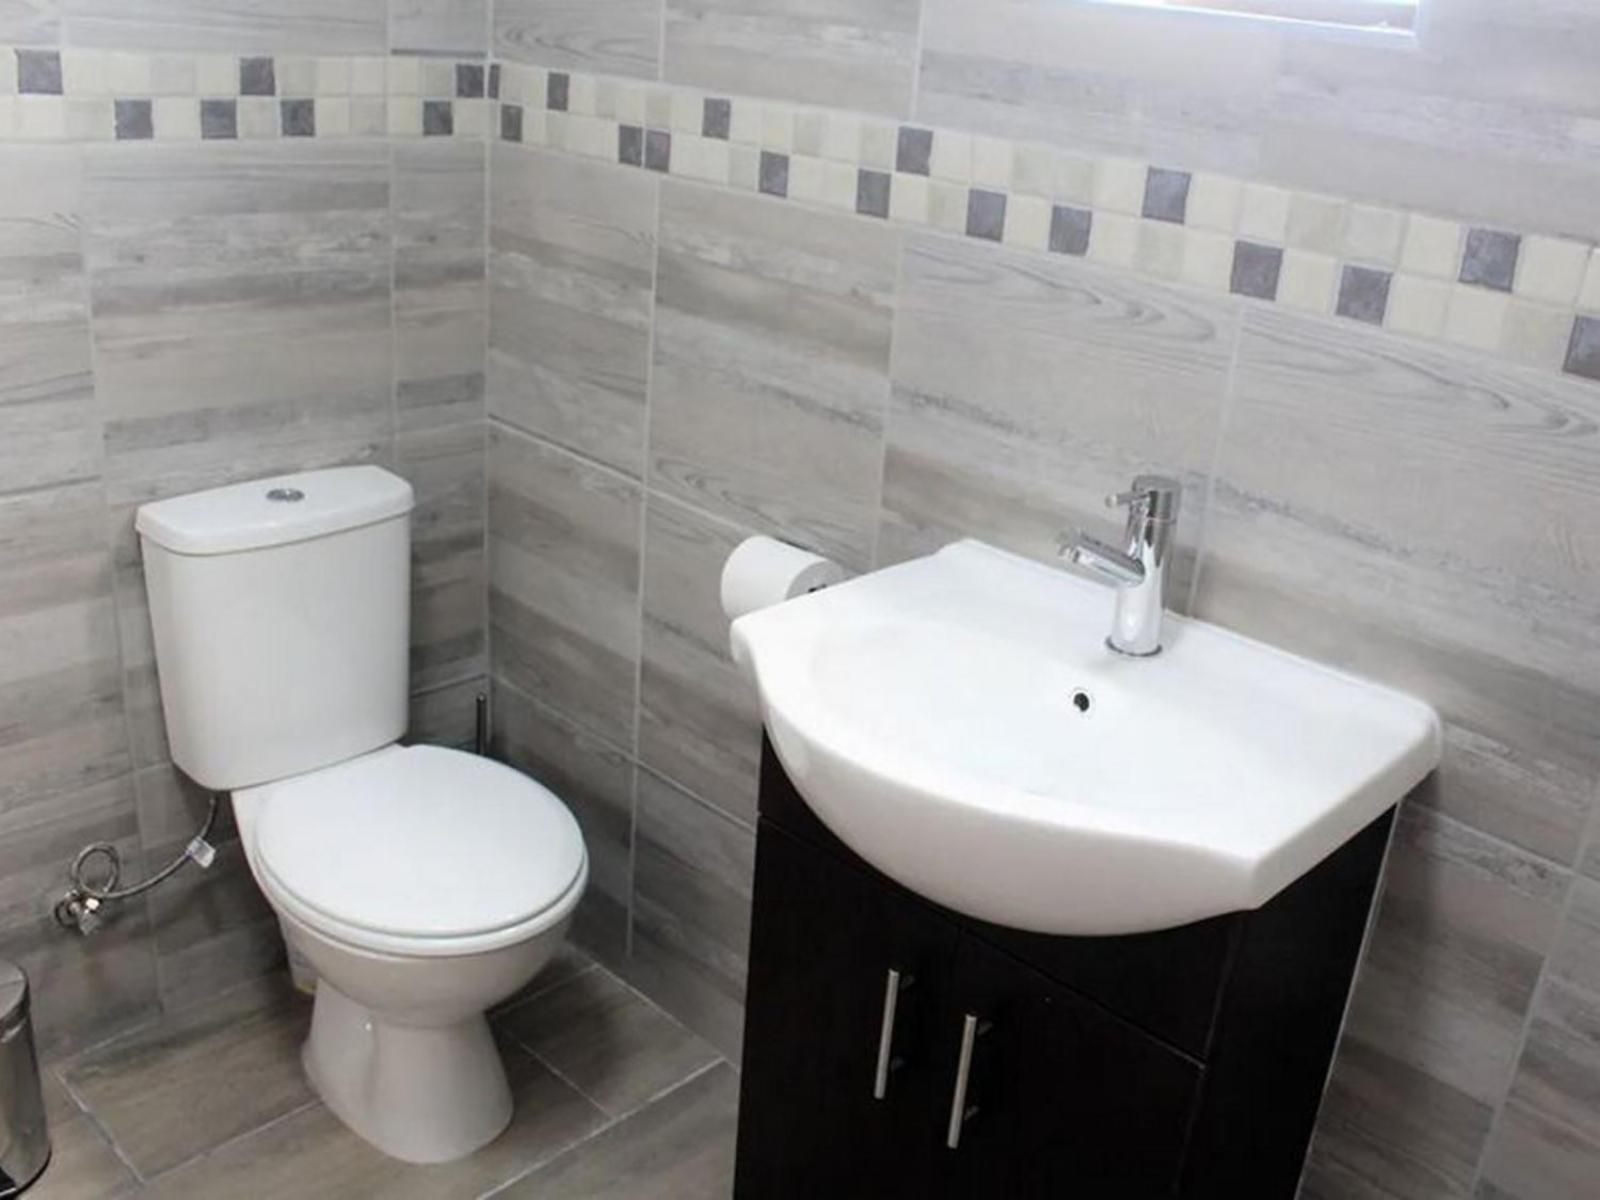 Home In The East Garsfontein Pretoria Tshwane Gauteng South Africa Unsaturated, Bathroom